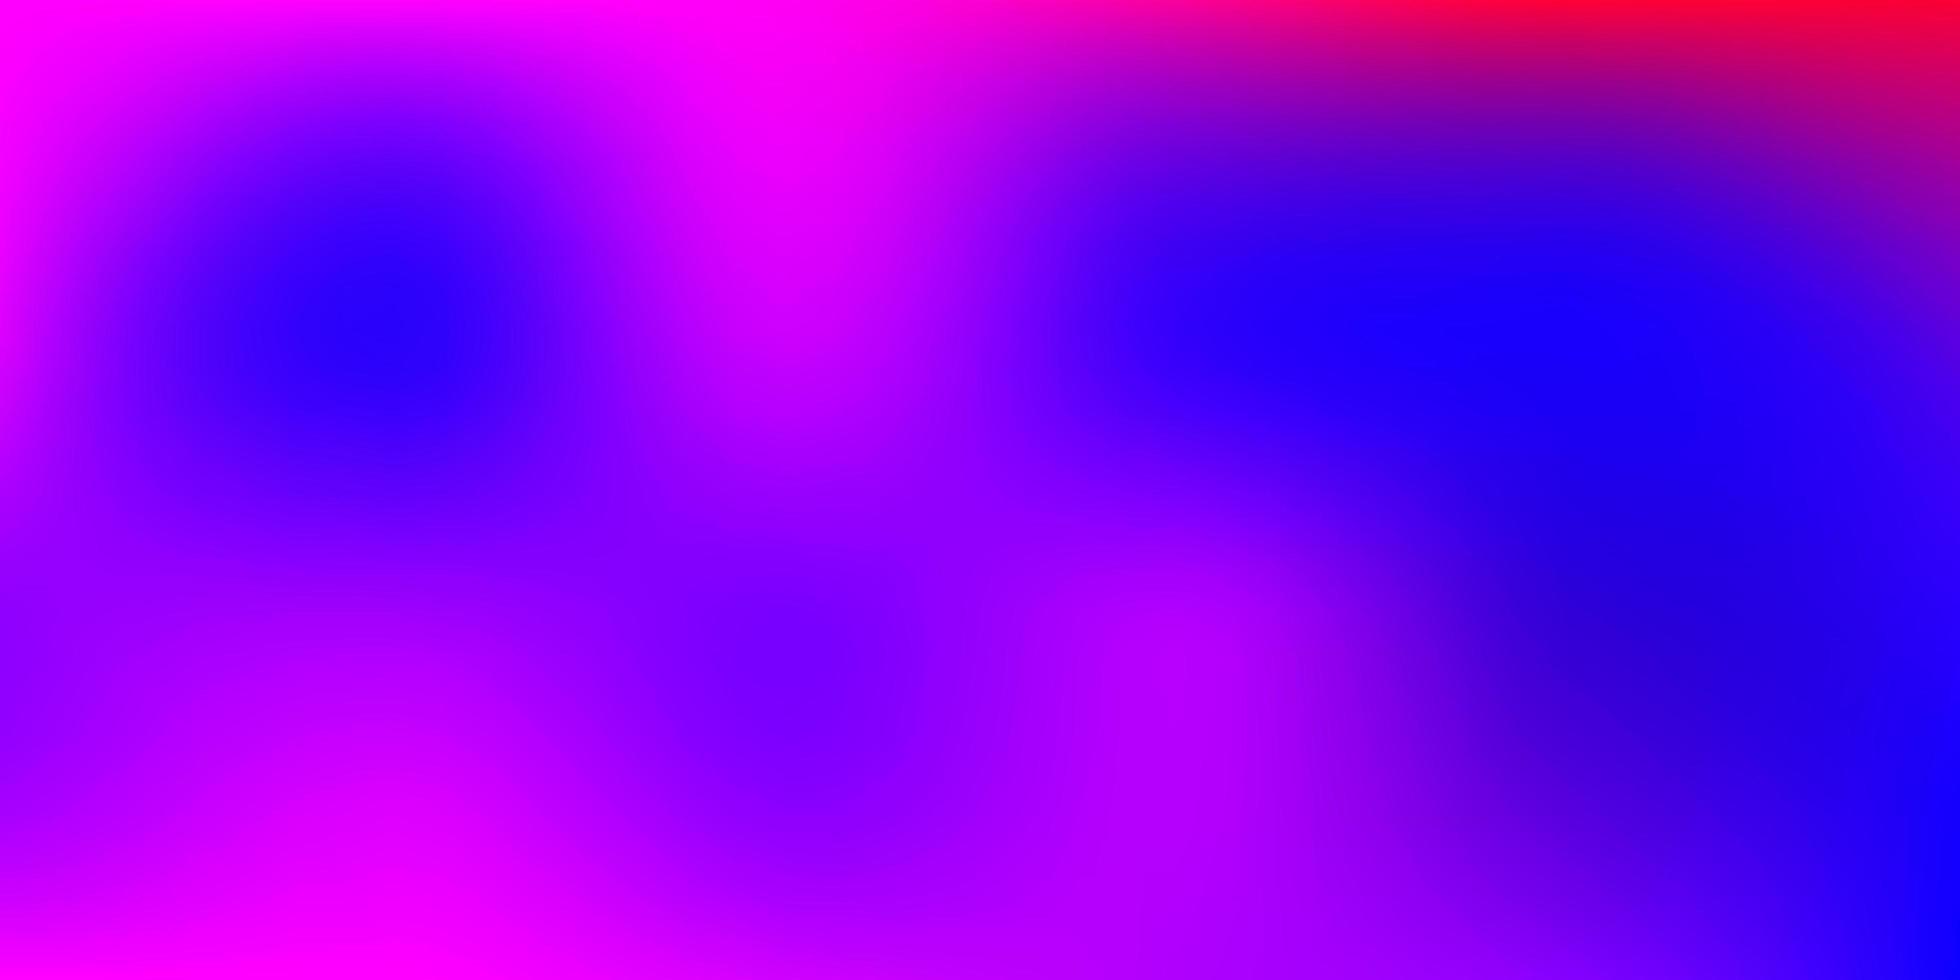 Light Purple Pink vector blurred background